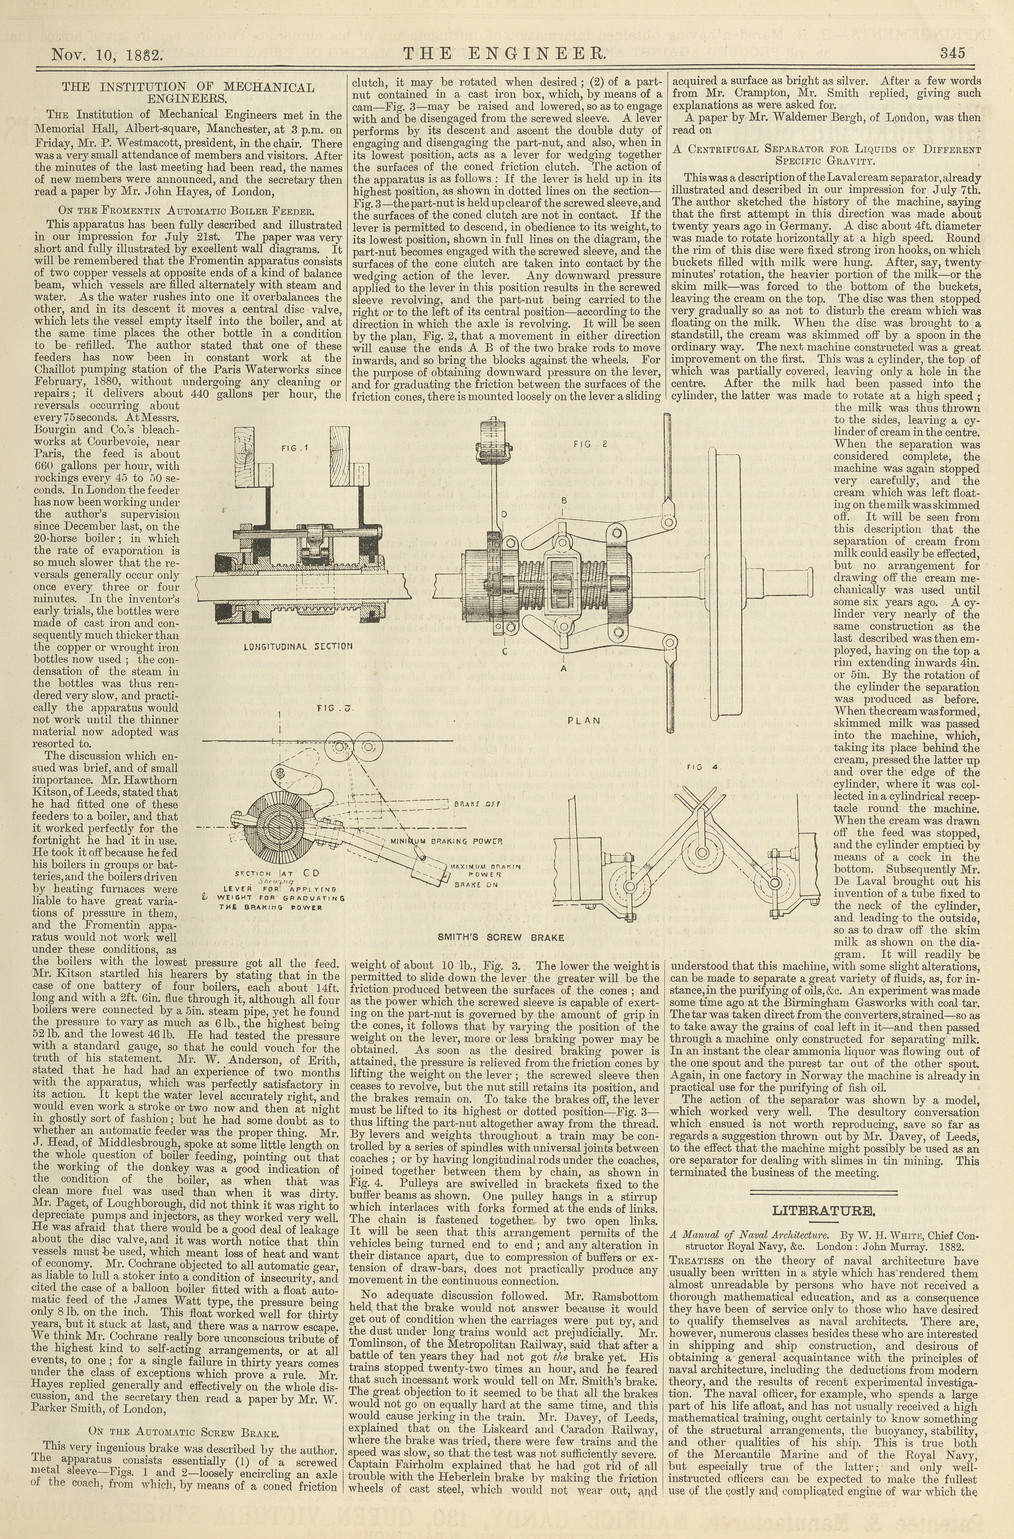 The Engineer, Vol. 54, 10 November